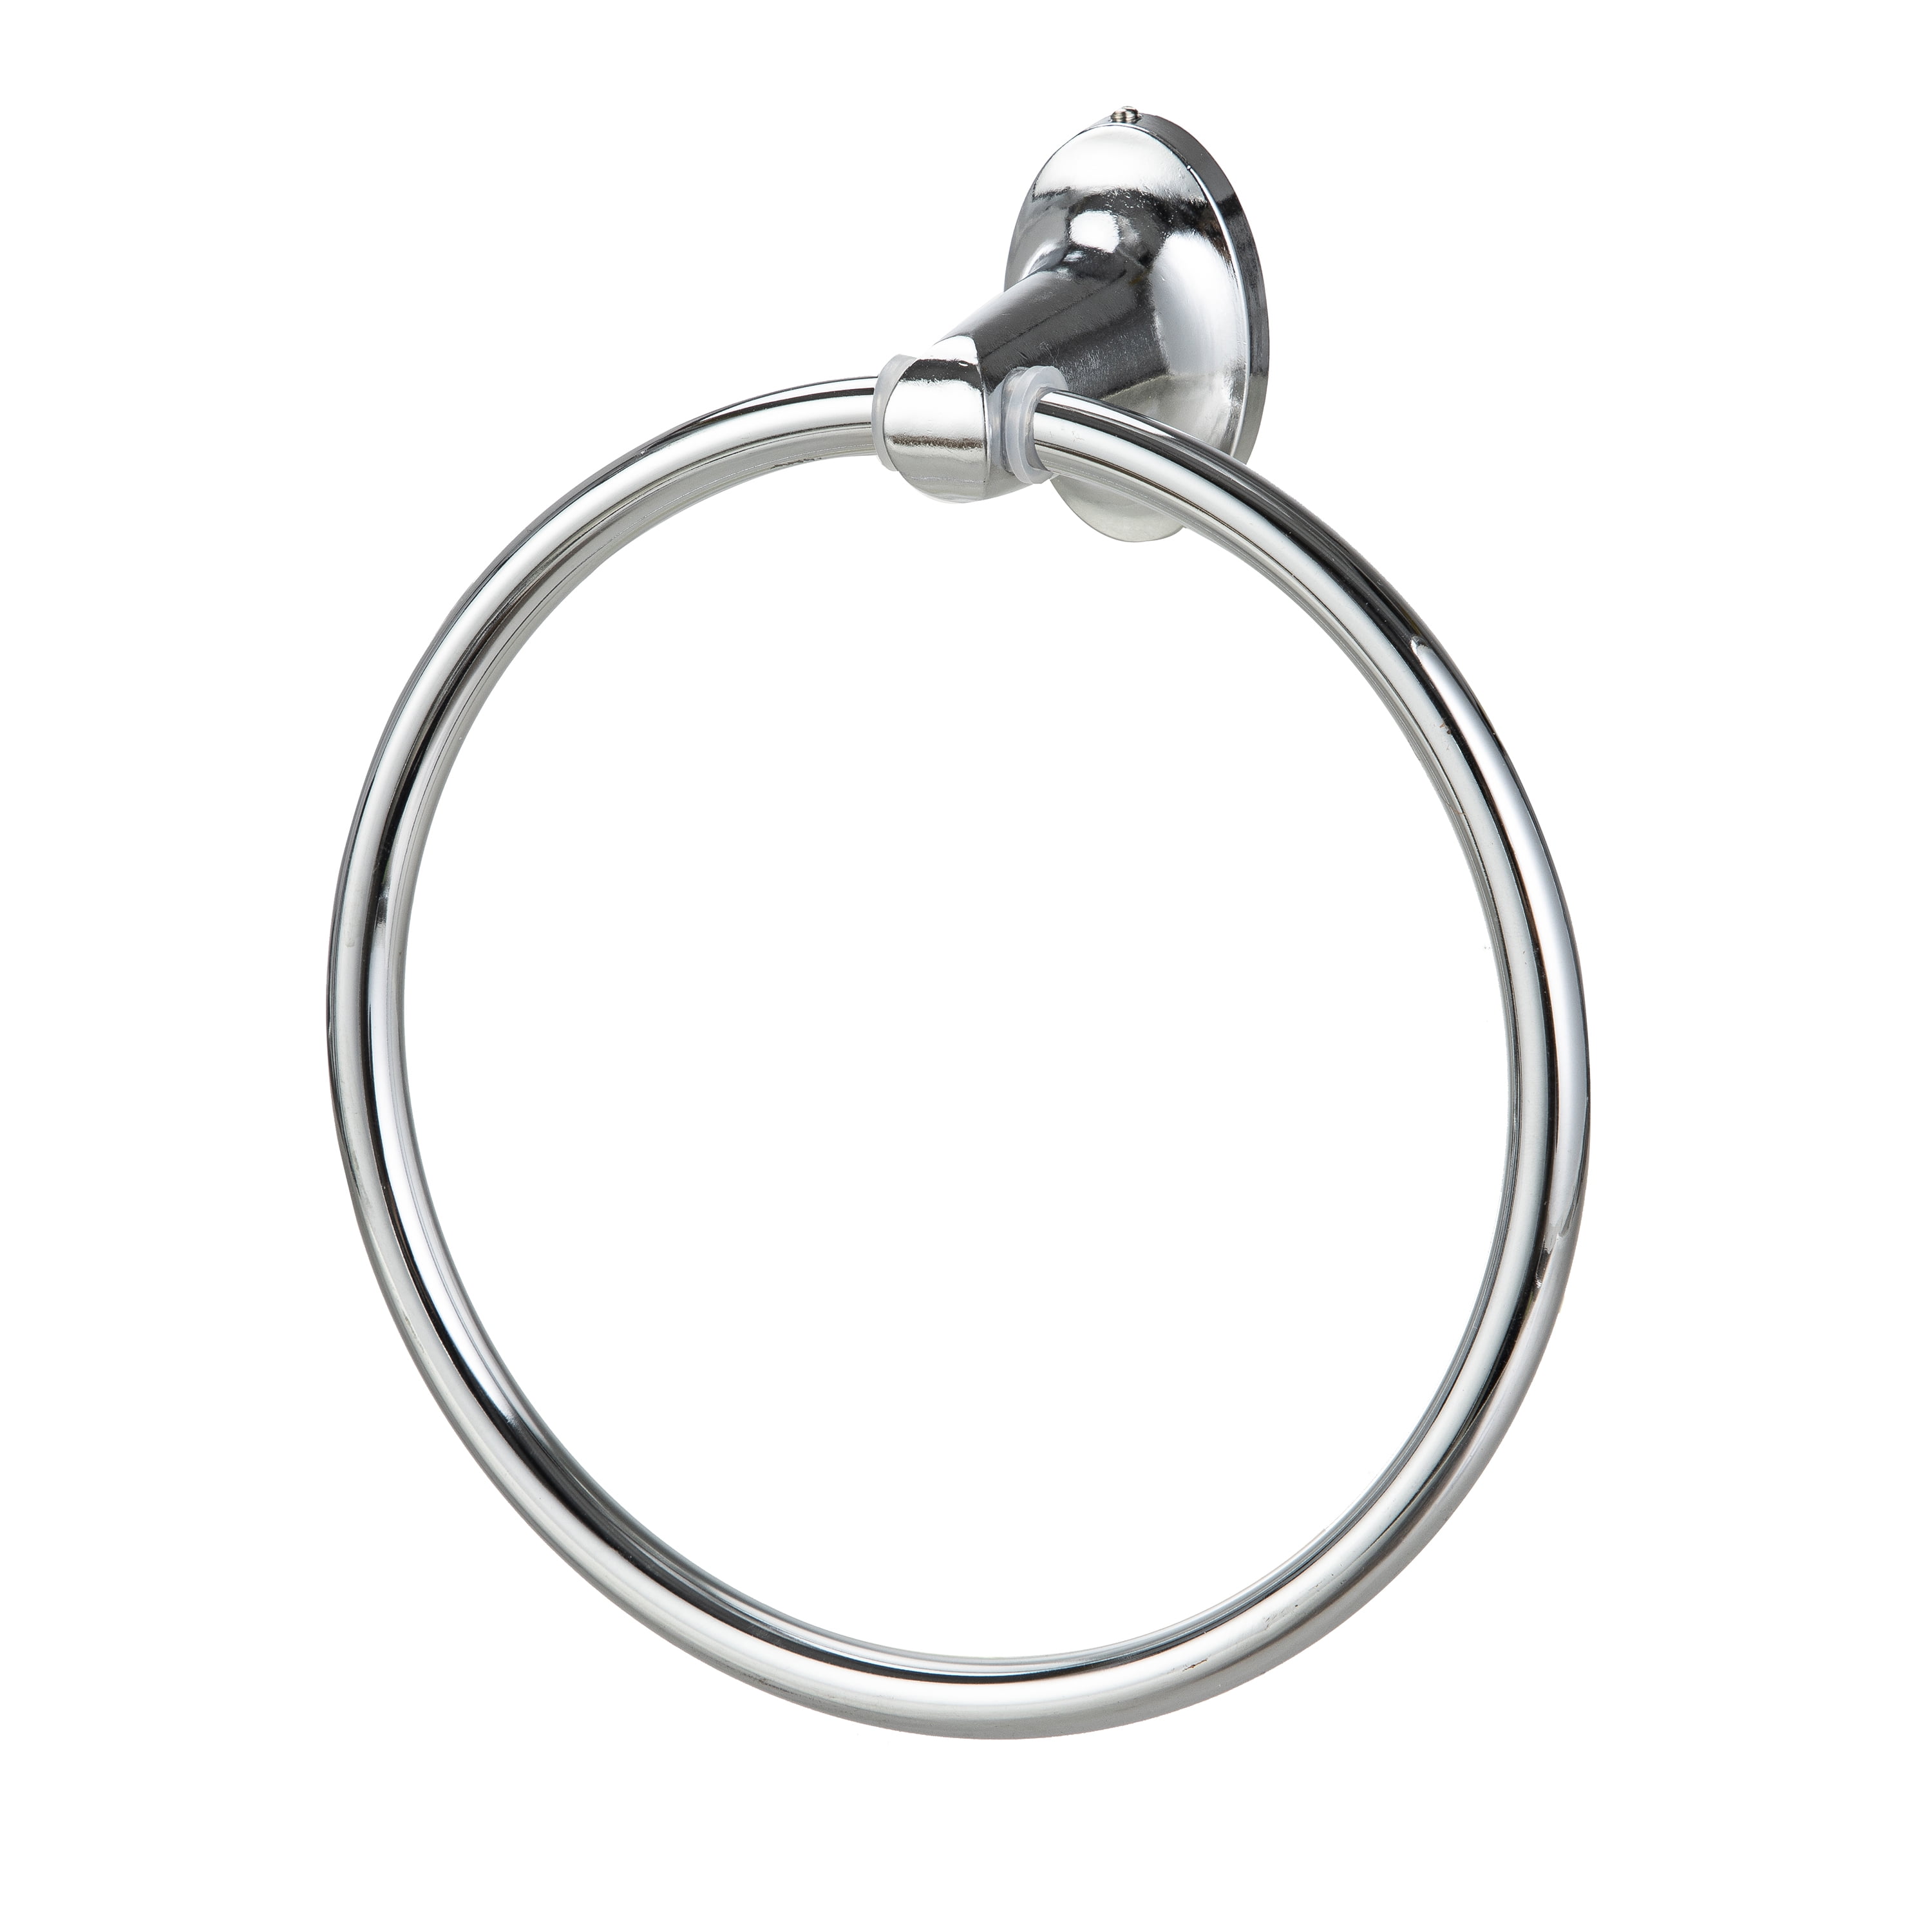 Mainstays Oval Style Steel Towel Holder Ring, Chrome Finish - Walmart.com